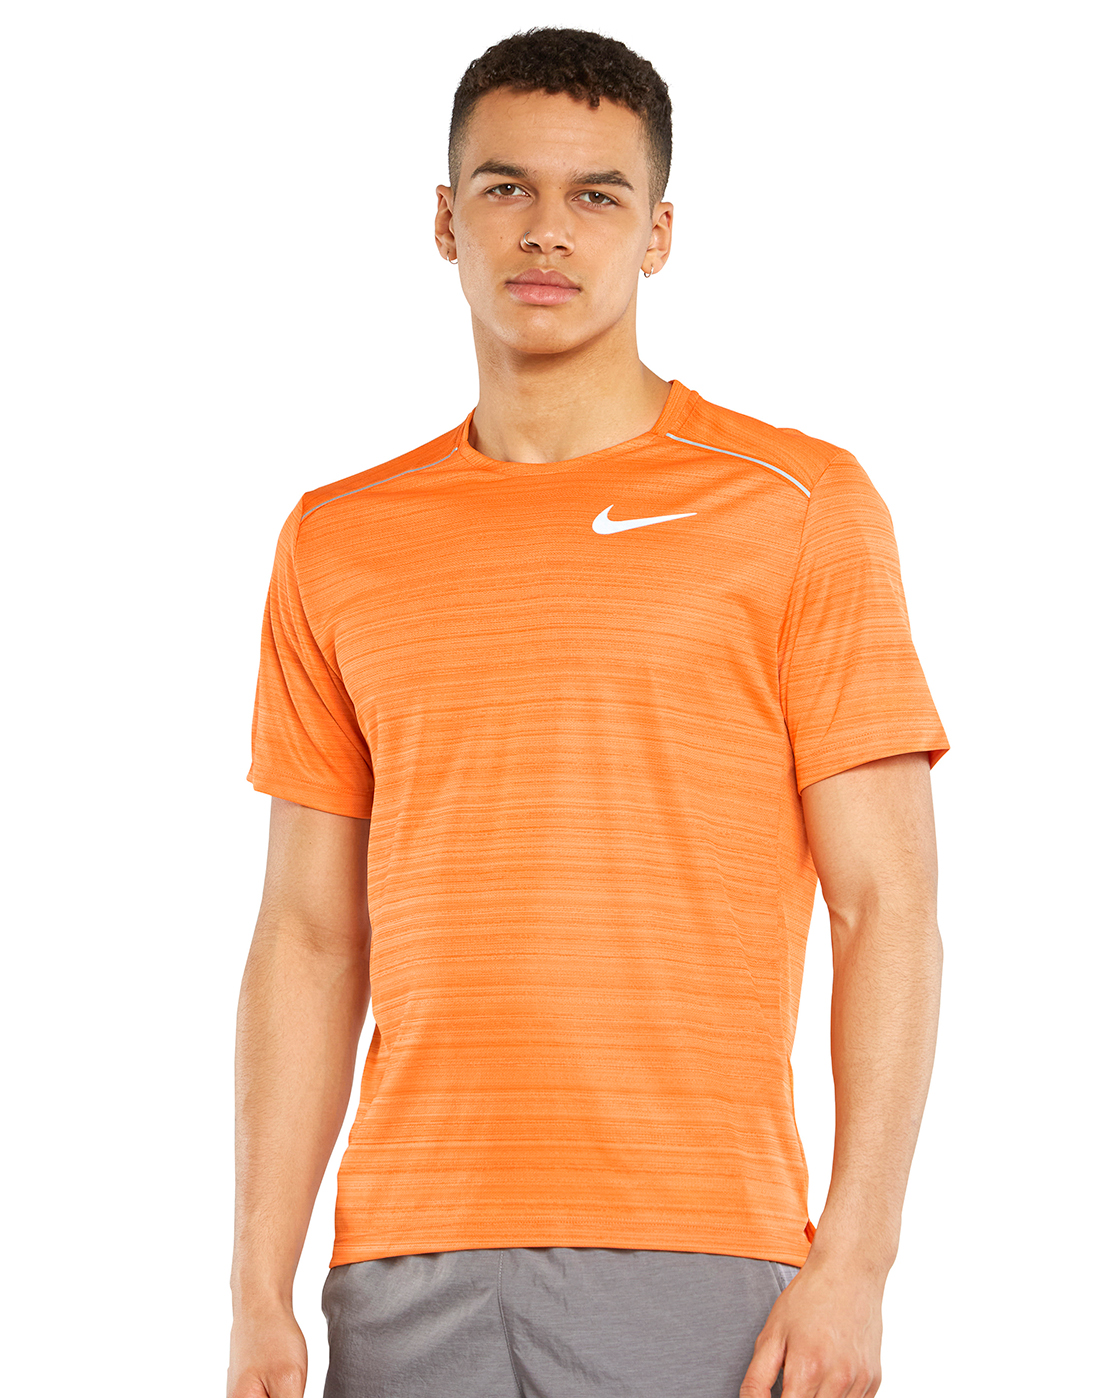 Nike Mens Dry Miler T-shirt - Orange | Life Style Sports UK